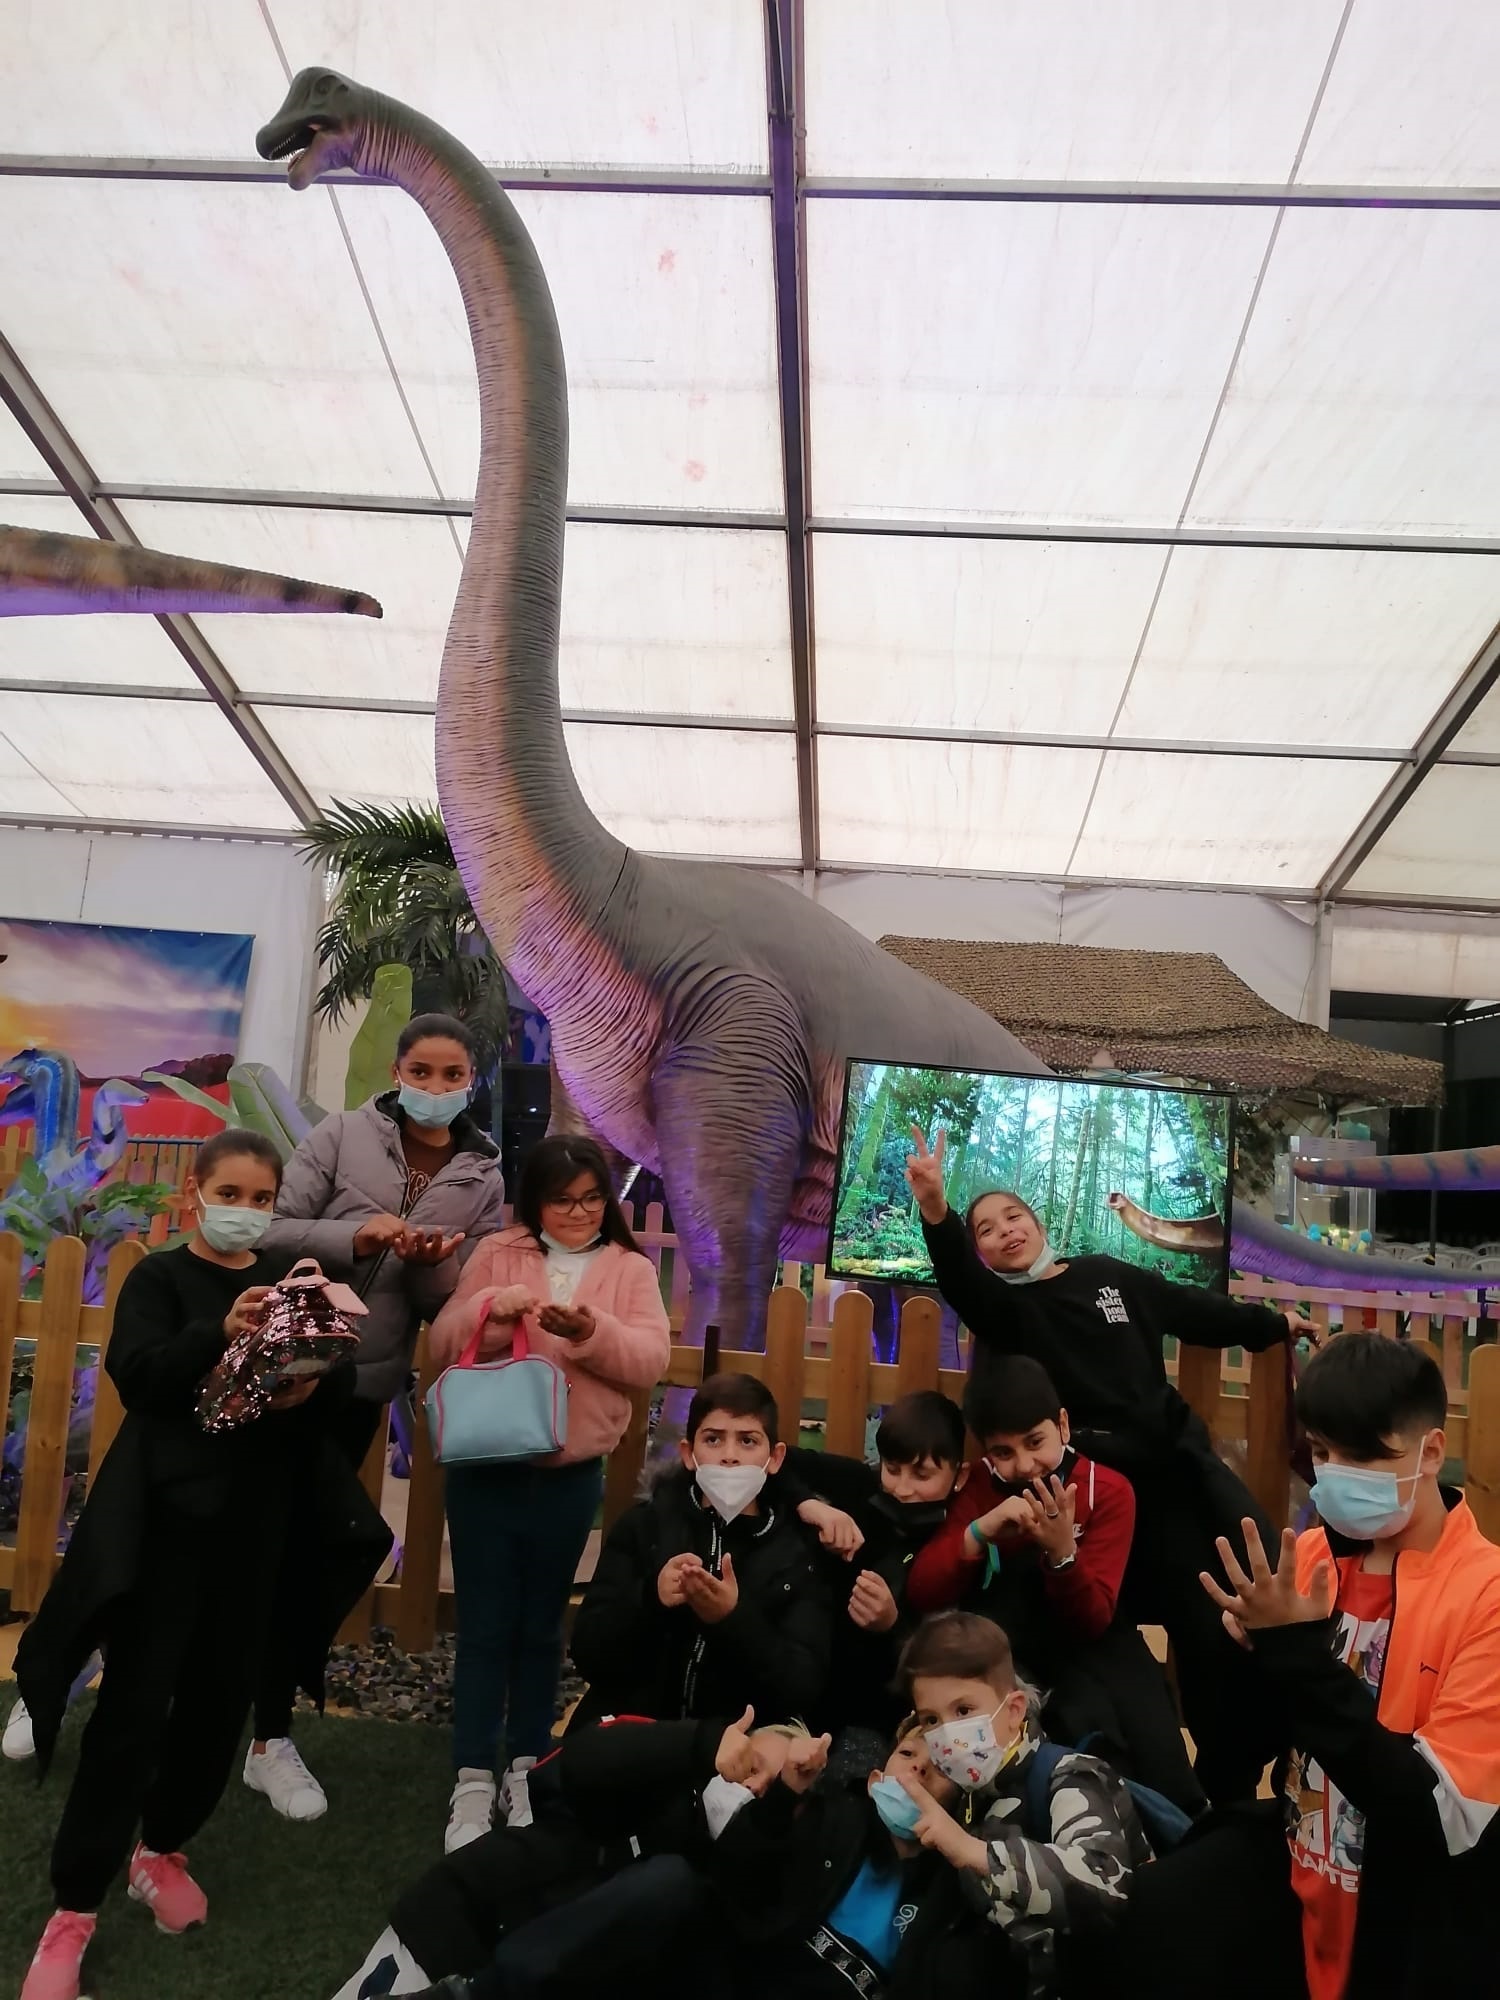 Excursión a la exposición de dinosaurios